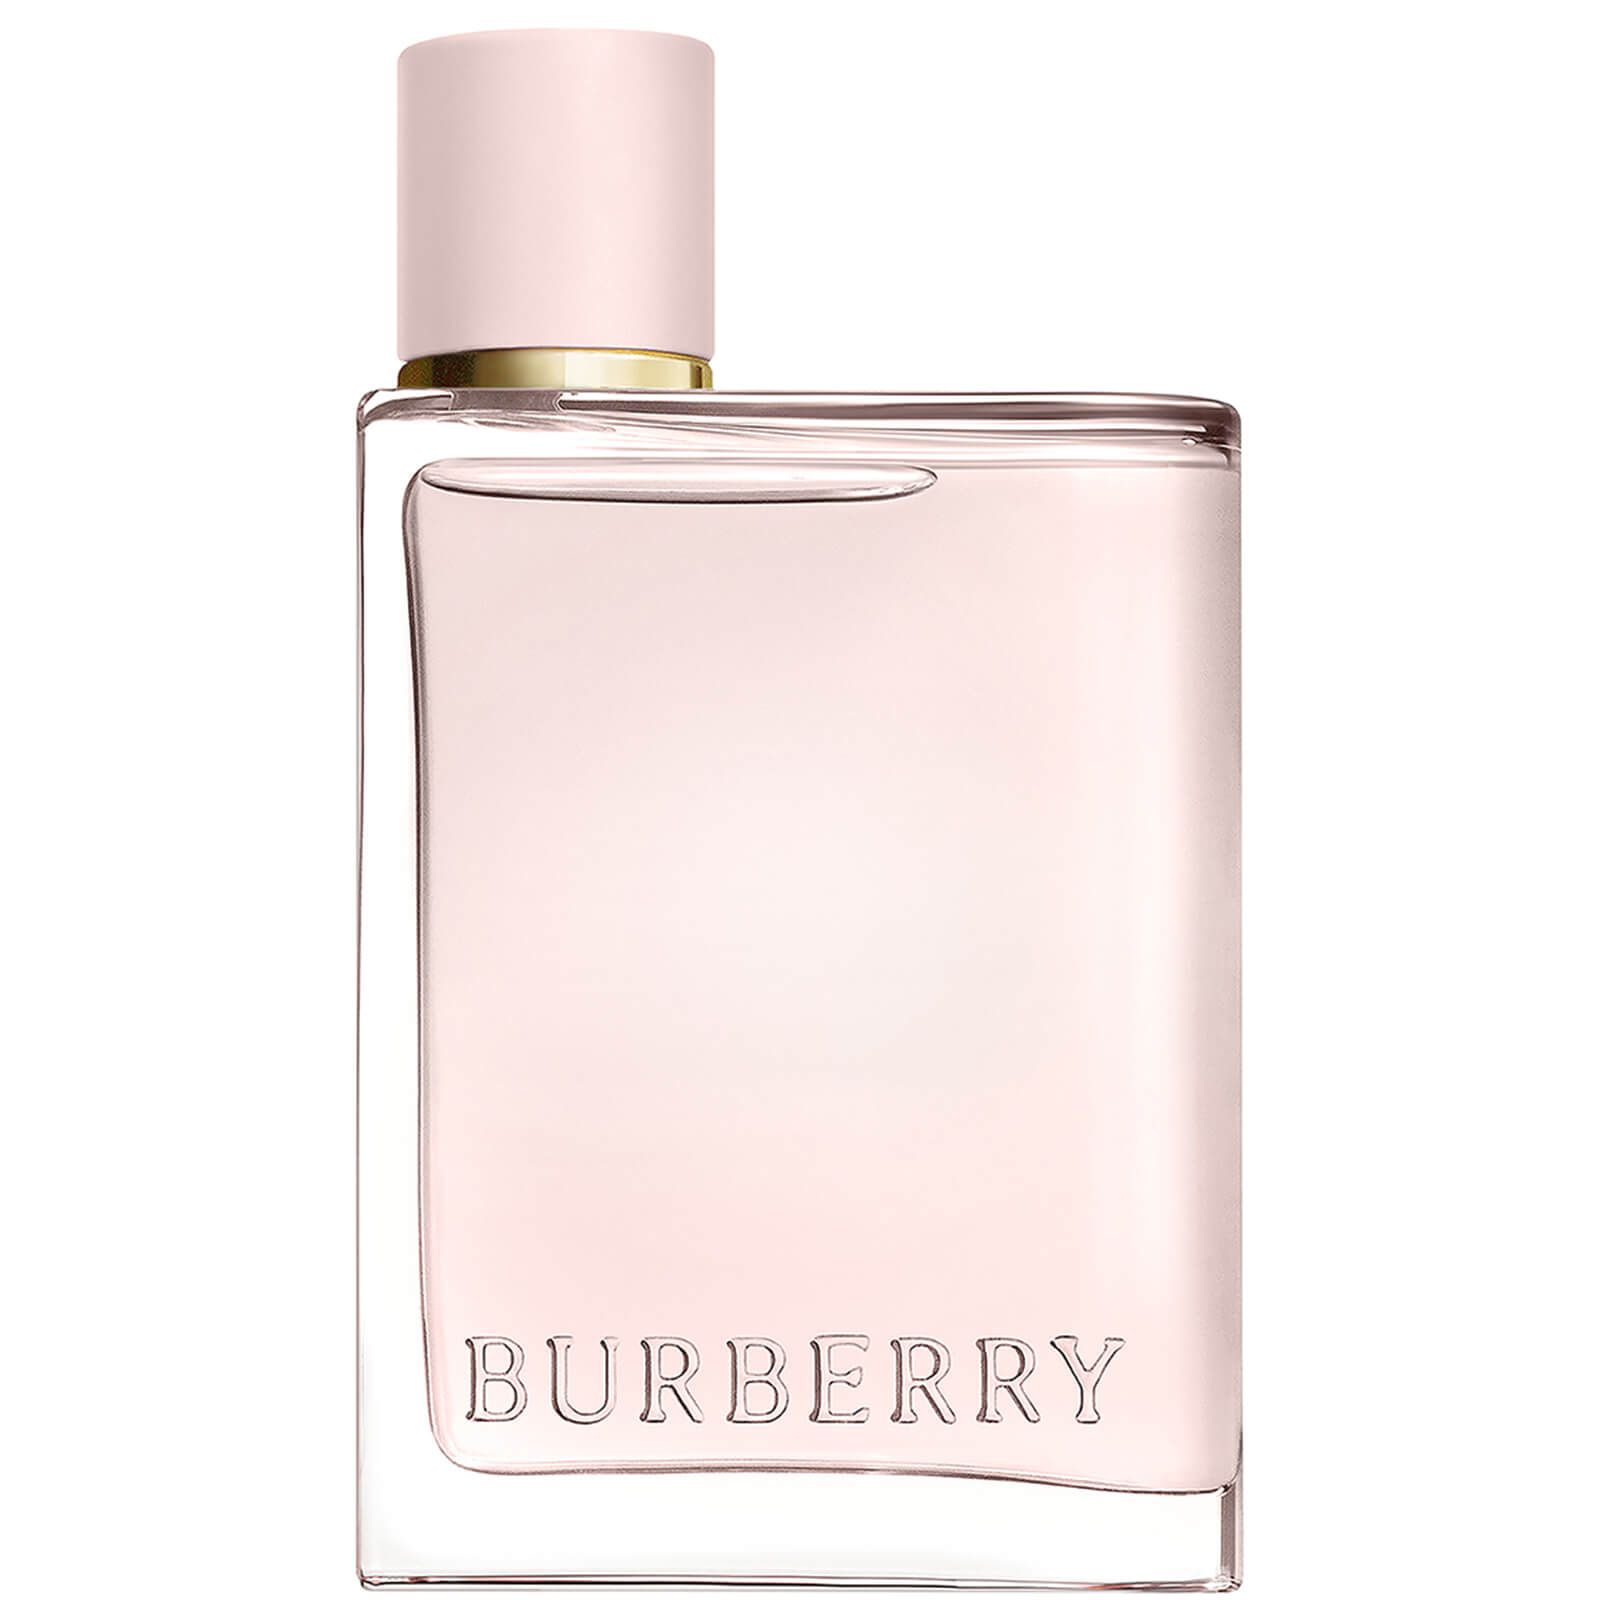 Burberry her eau. Burberry her 100ml. Барбери her Eau de Parfum. Burberry духи her 30ml. Burberry her intense.